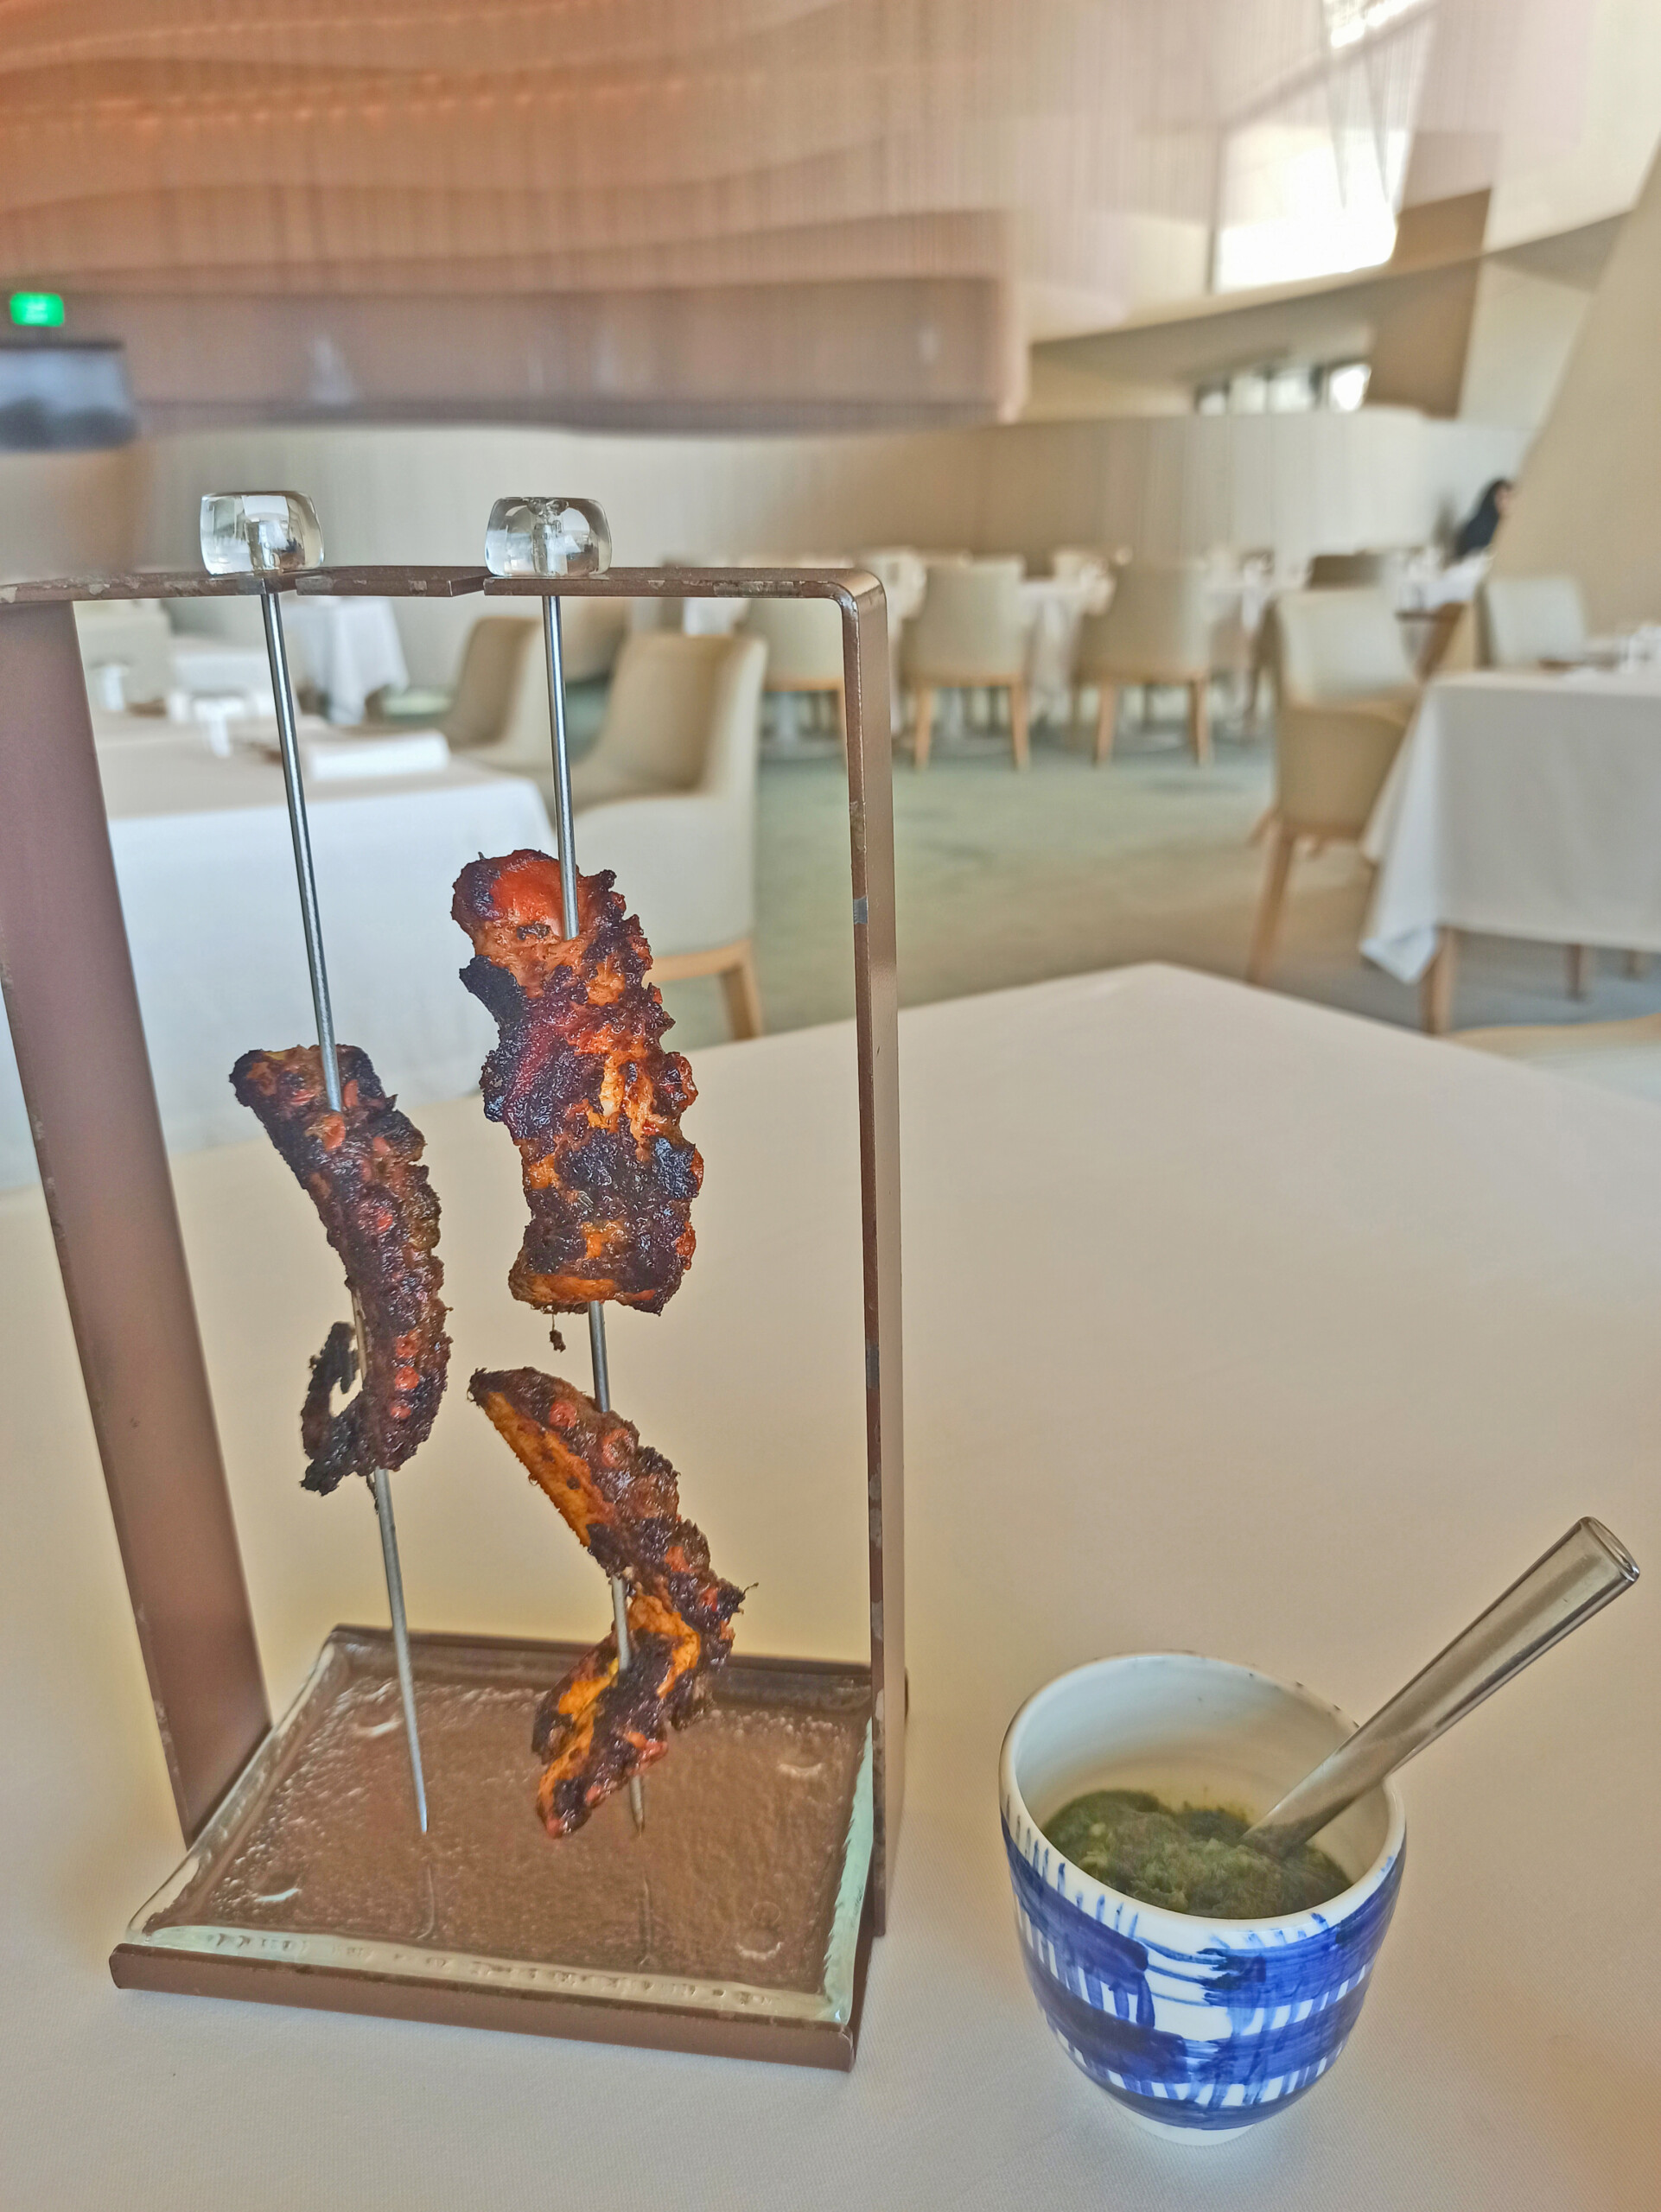 Grilled octopus at Jiwan restaurant, Doha, Qatar